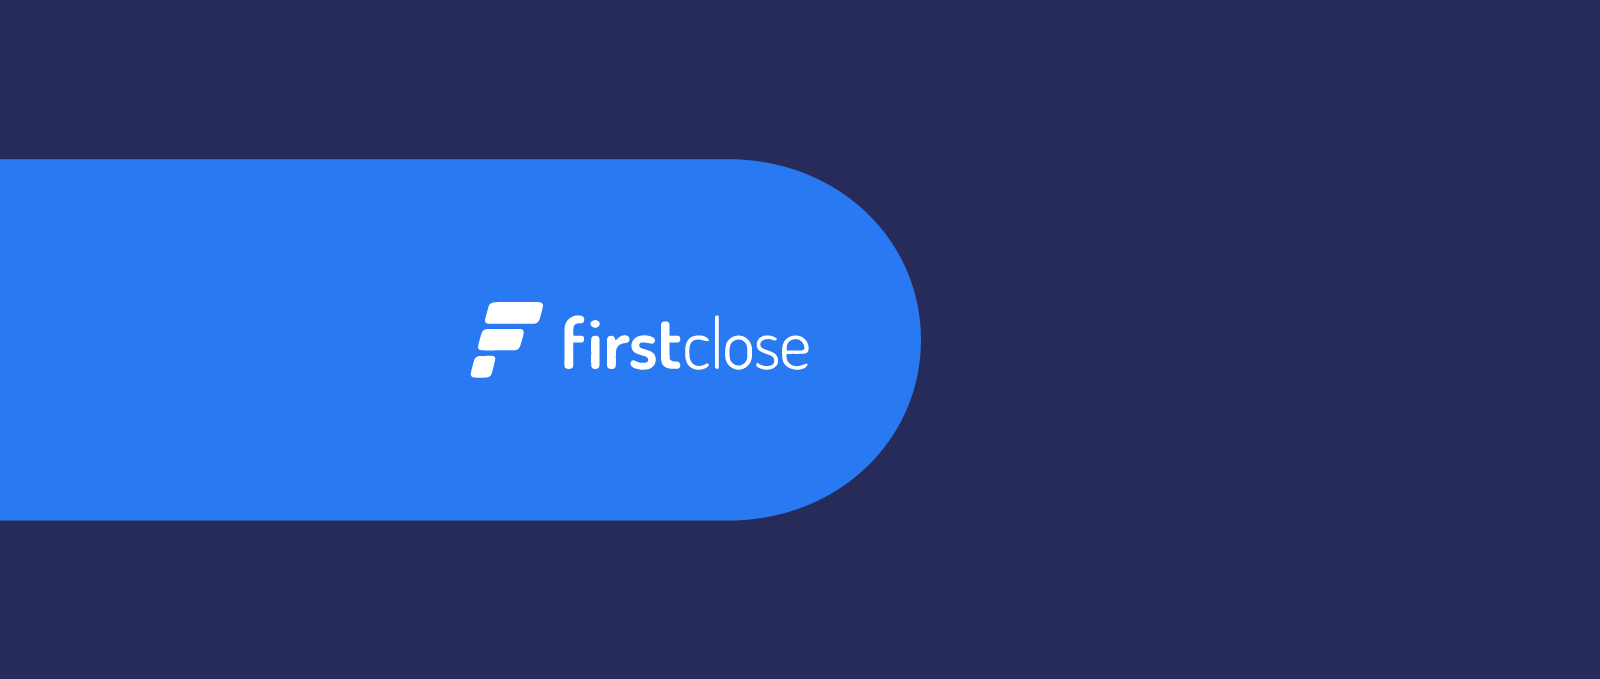 Firstclose_Case-Study_Header